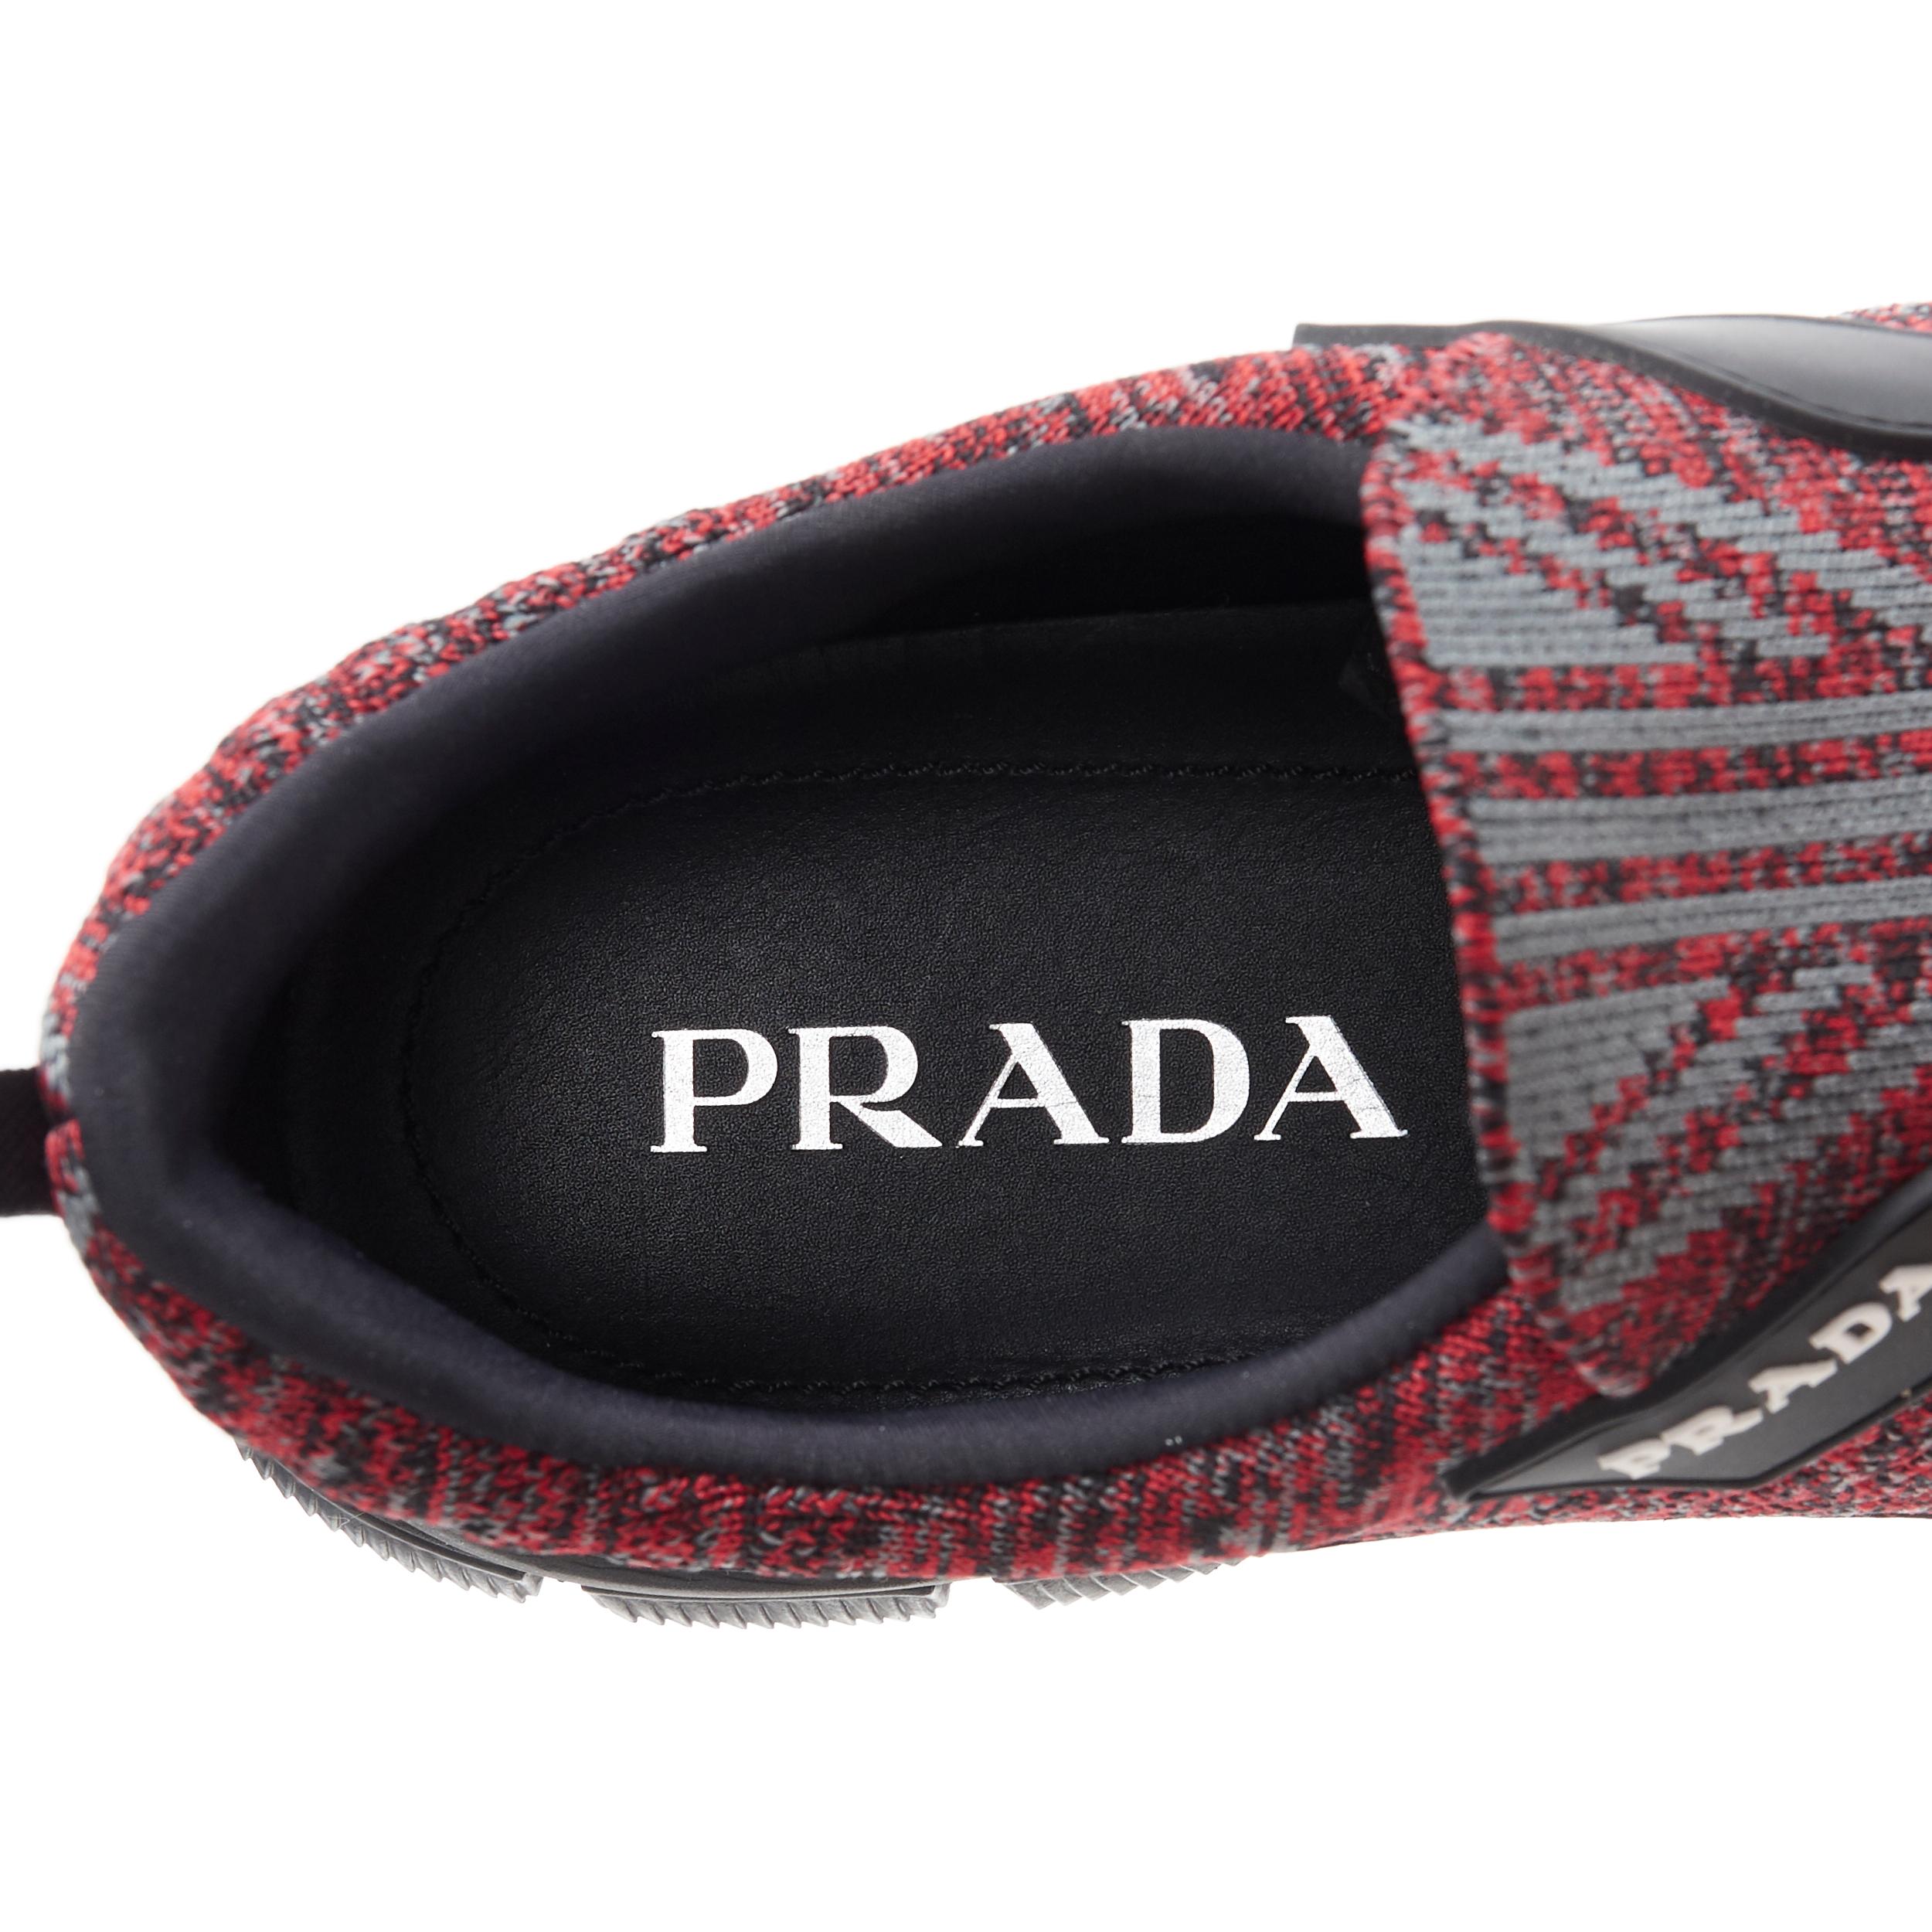 new PRADA Crossection Knit Low red black sock low runner sneakers UK7 EU40 3